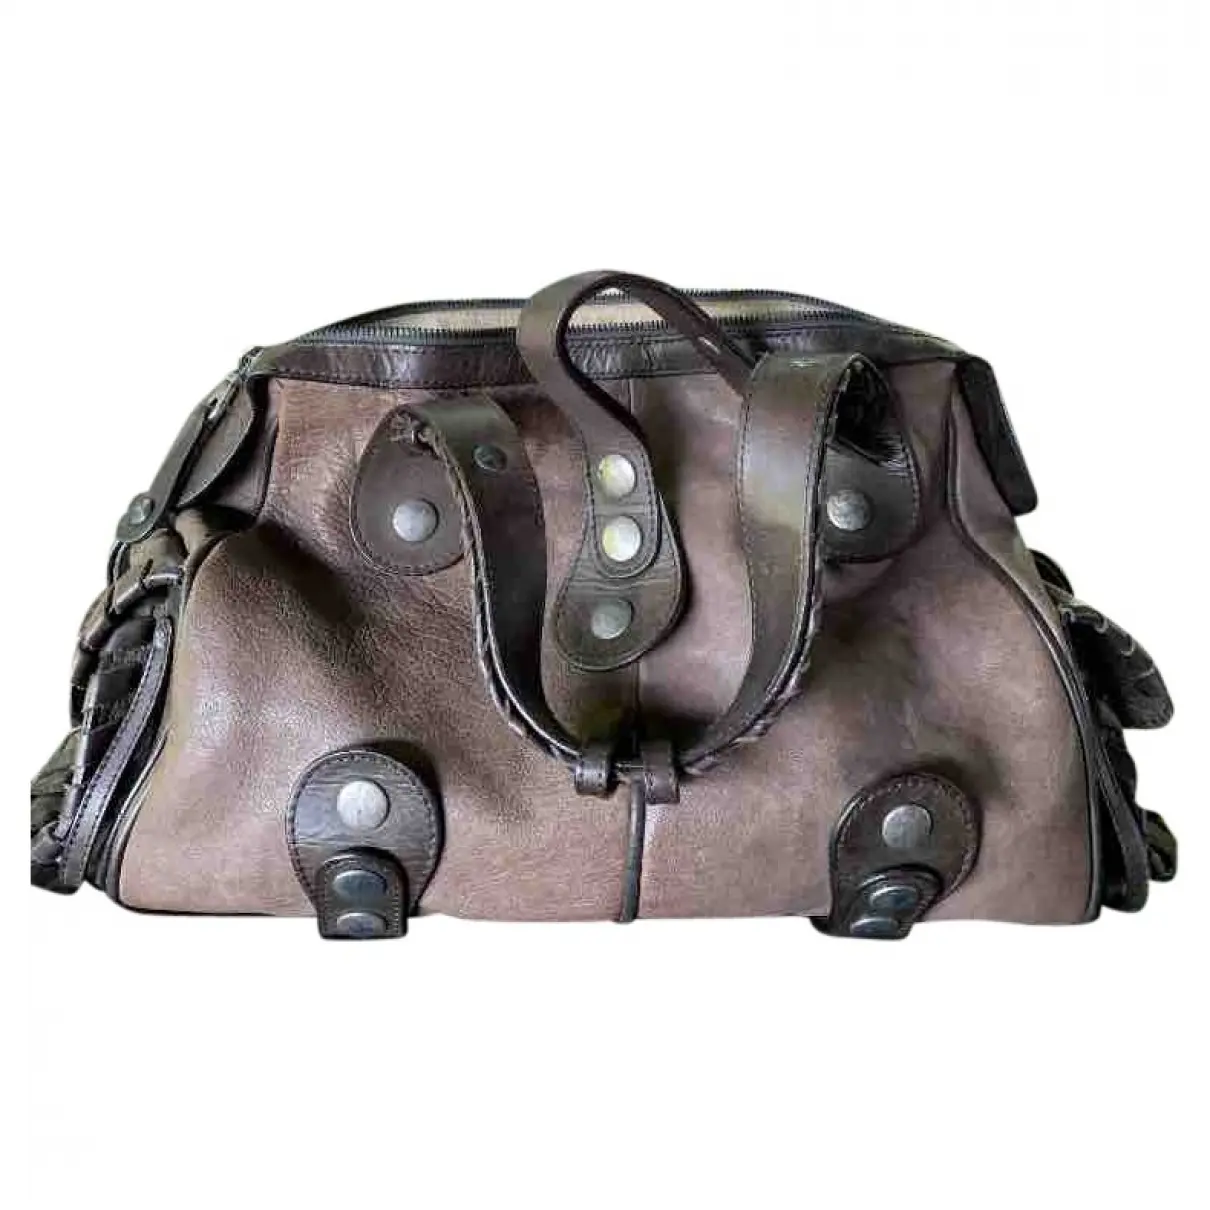 Silverado leather handbag Chloé